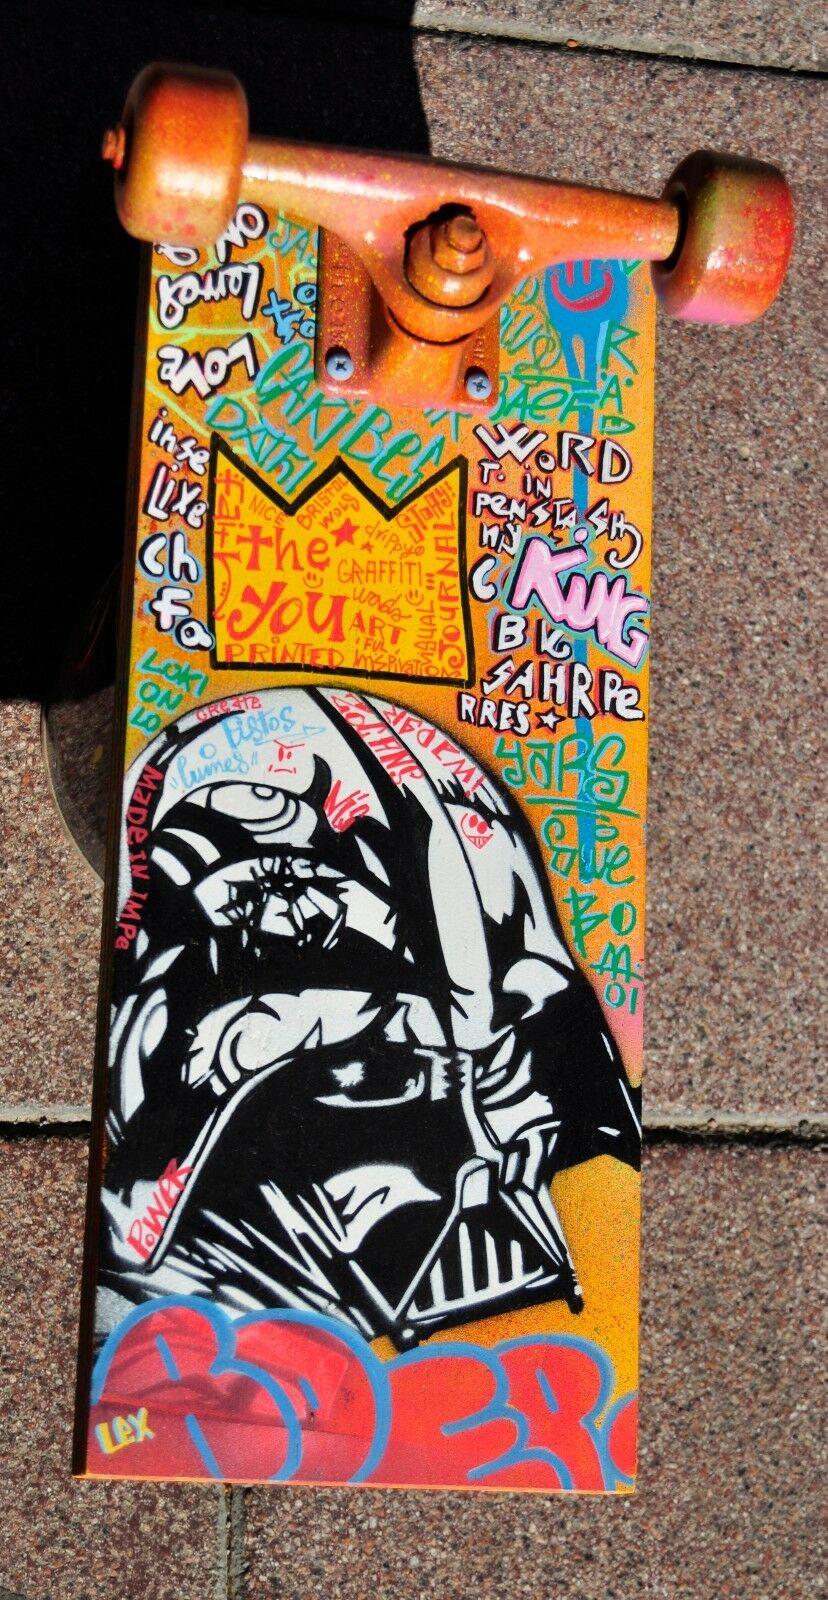 BOER VADER  Acrylic on wood laminate, and skate axle - Street Art Art by Alberto Blanchart